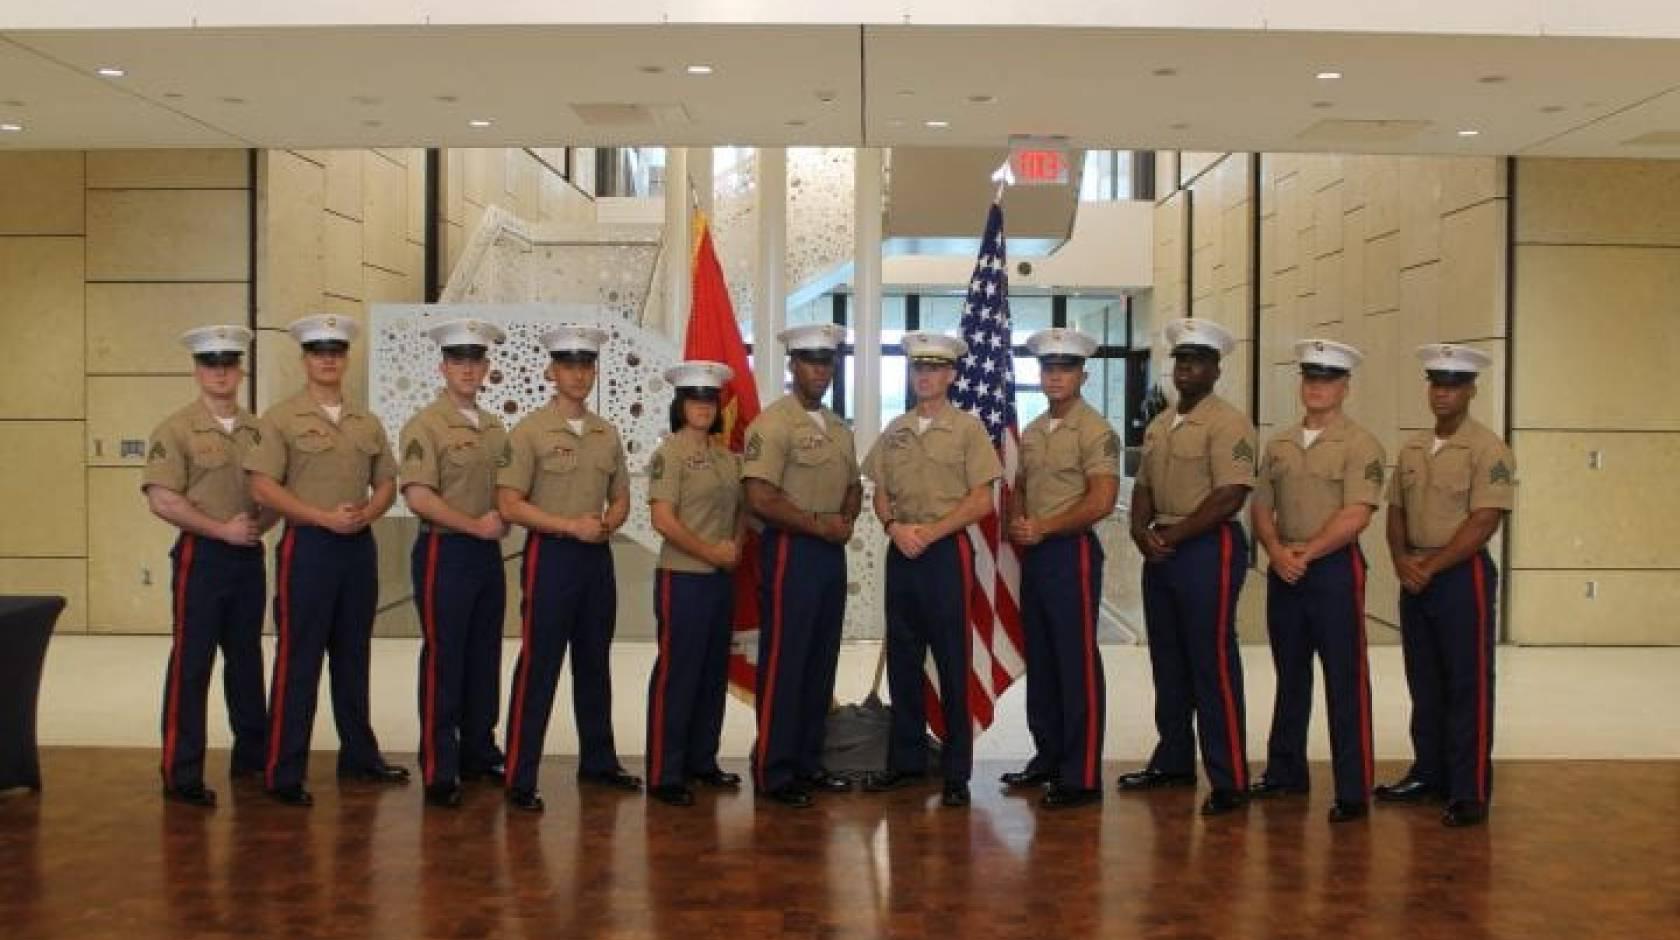 United States Marine Corps veteran and UCI sociology alumnus Andrew Truong ’23 (fourth from right), 与战友合影, 穿着制服，在国旗前悠闲地摆姿势.